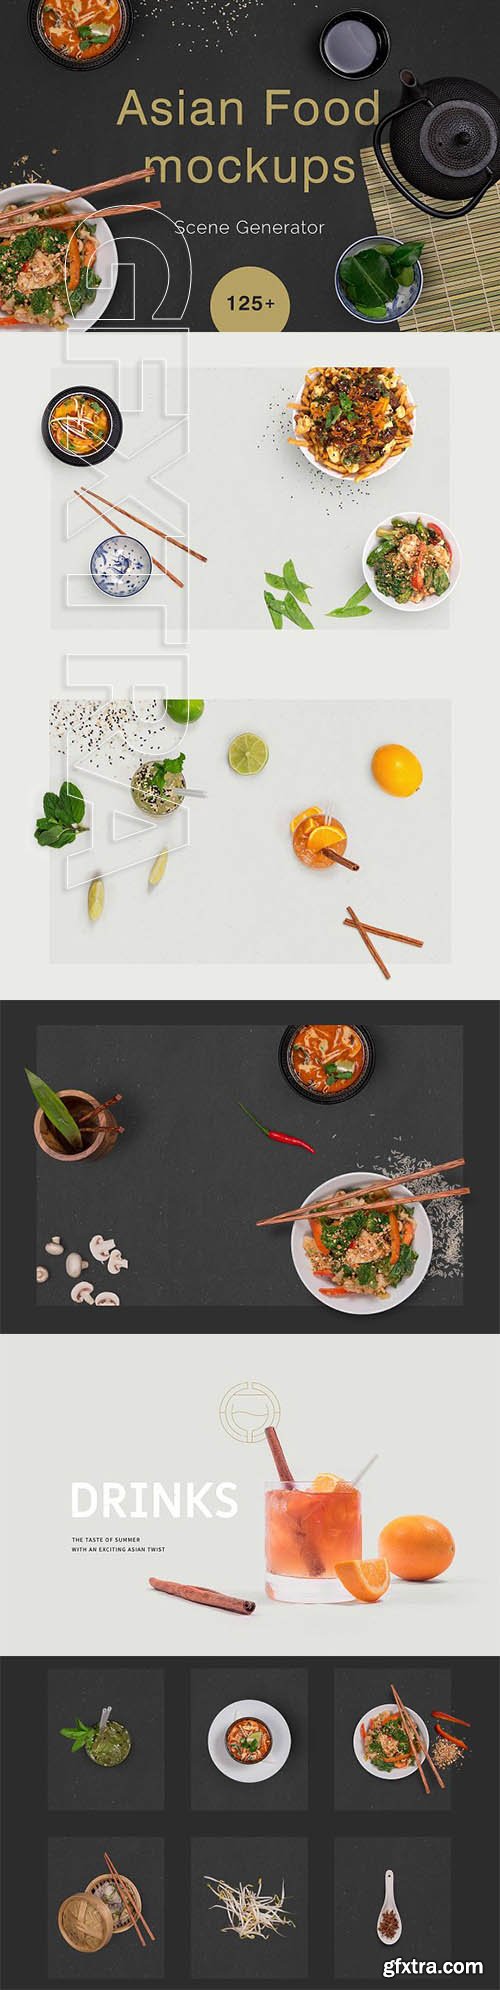 CreativeMarket - Asian Food Scene Generator 2219519